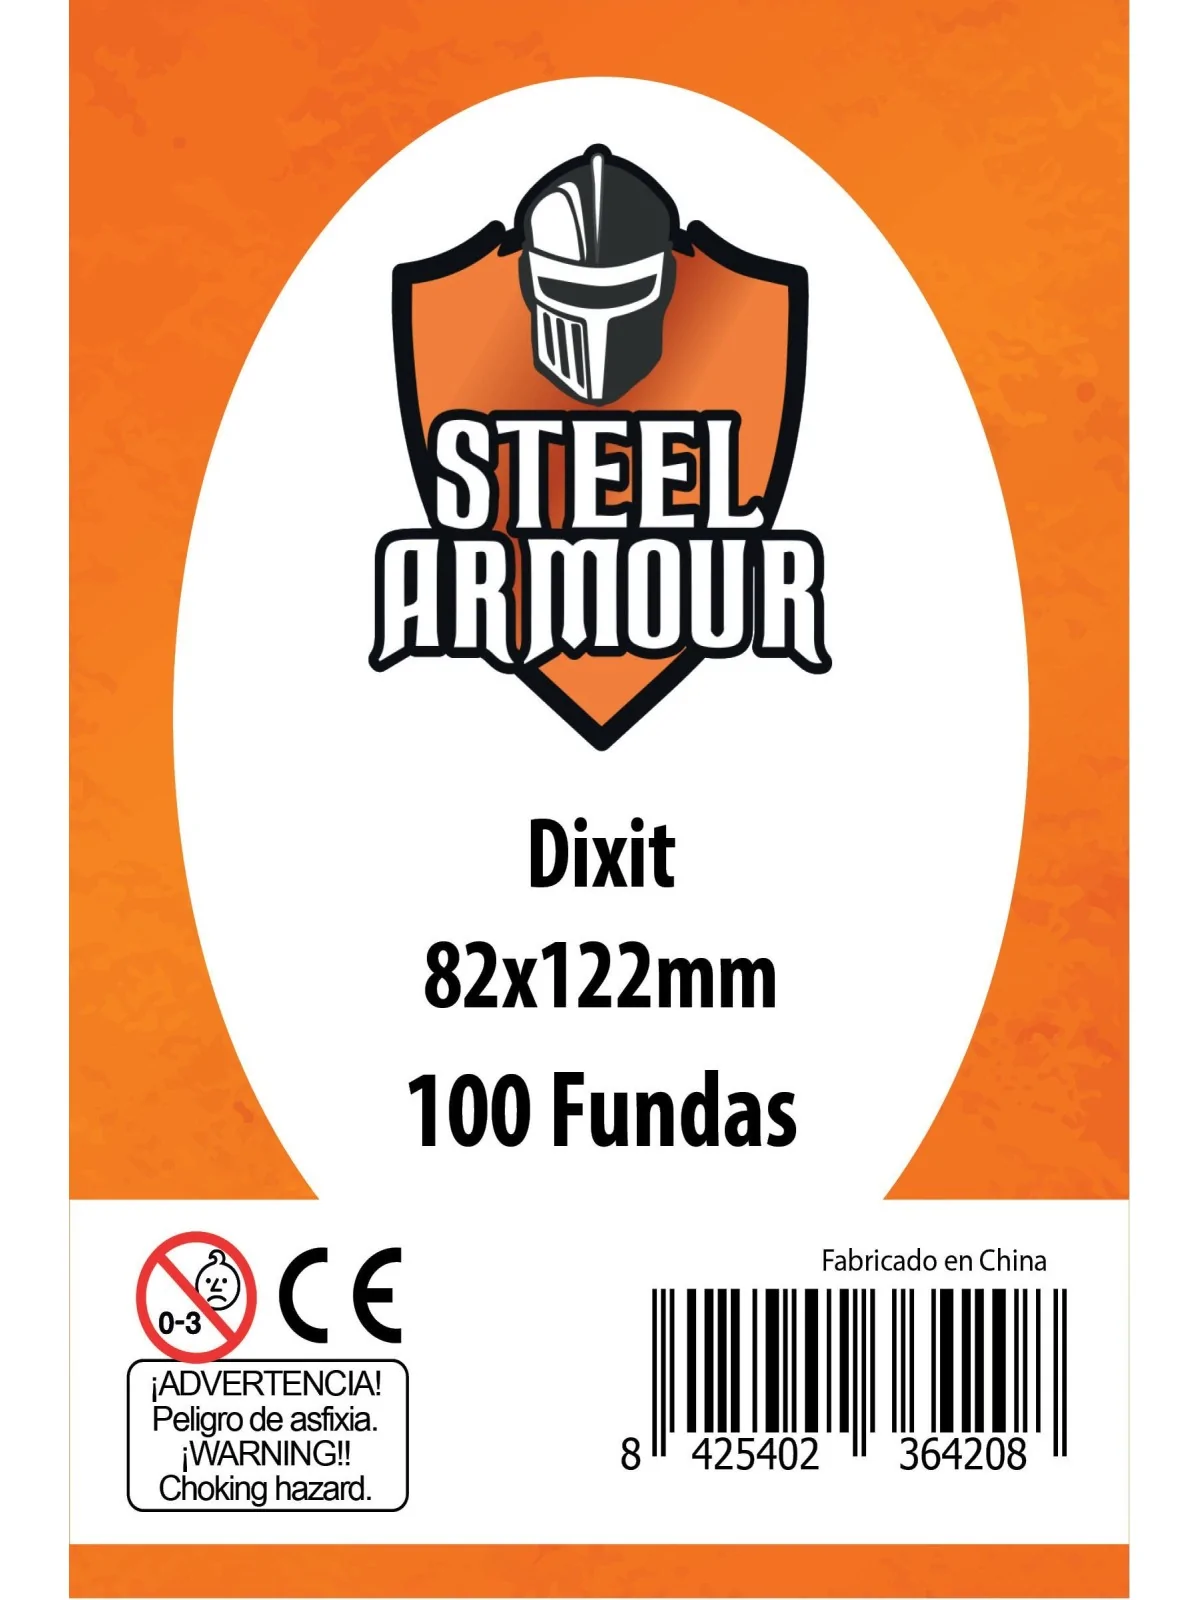 Comprar Steel Armour Dixit (Pack of 100) (82x122mm) barato al mejor pr